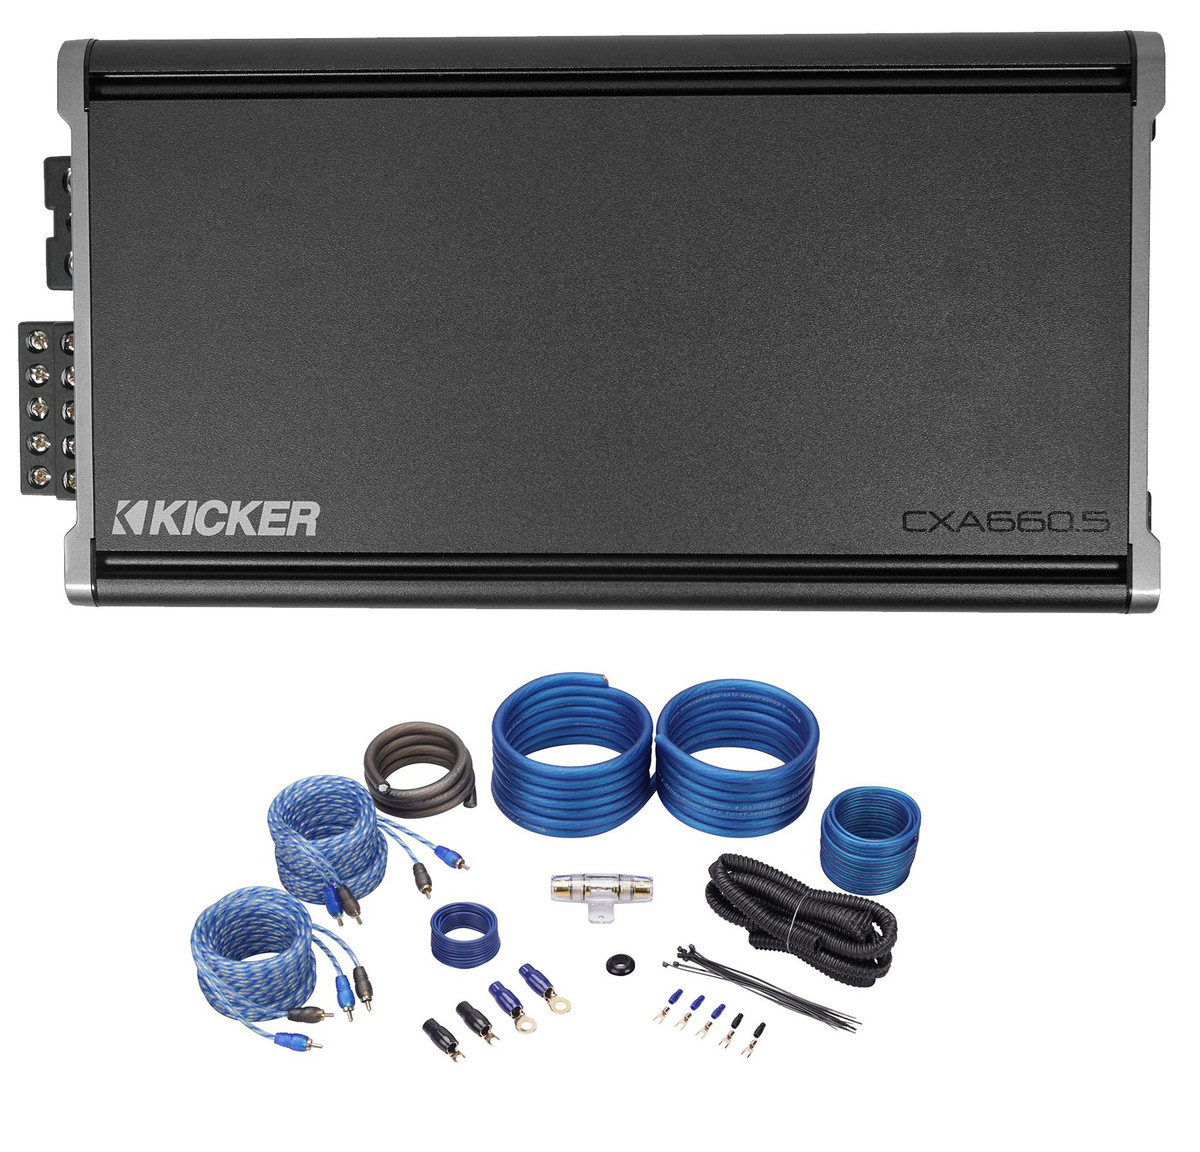 Kicker 46CXA6605T 5 Channel Car Amplifier and 46CXARCT Dash-Mount